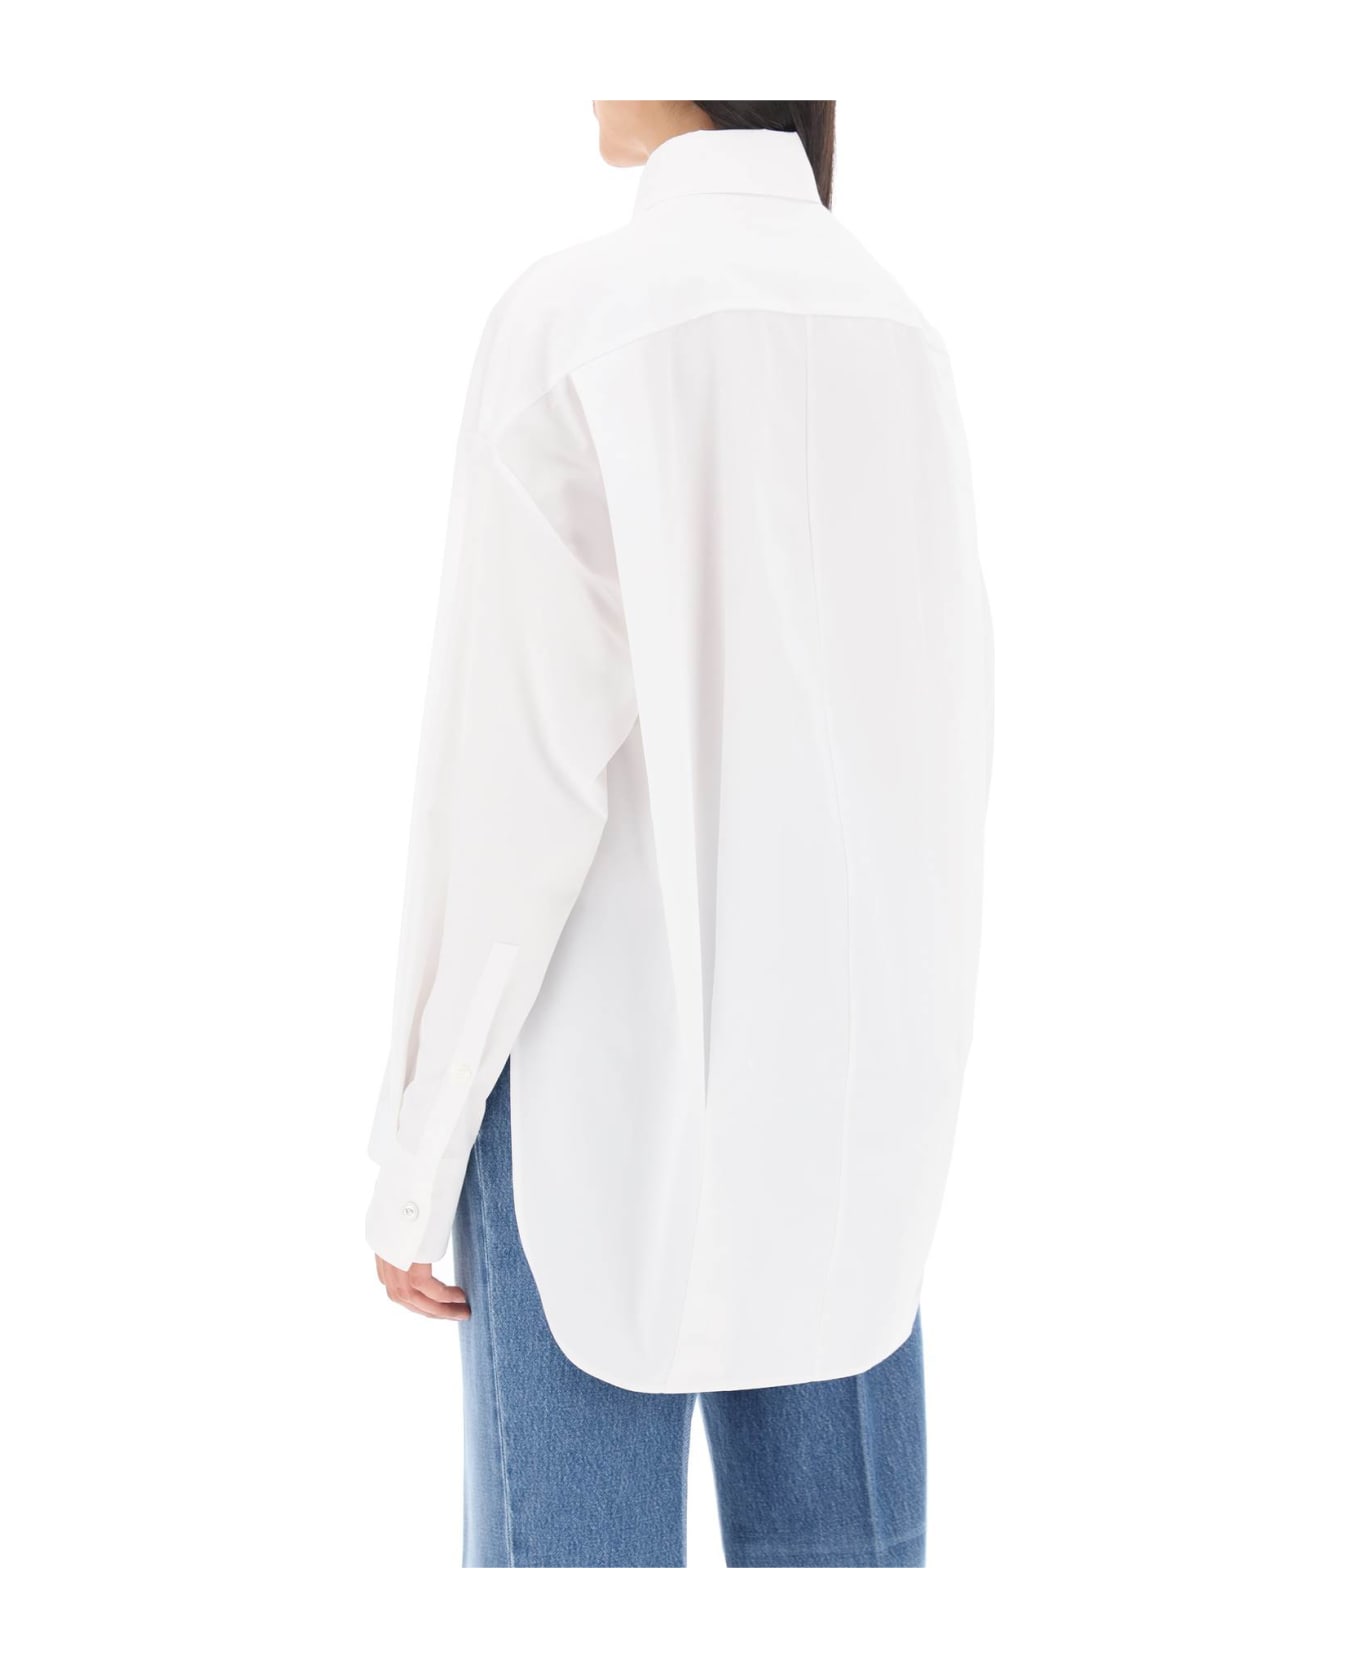 Versace Shirt - Bianco Ottico シャツ